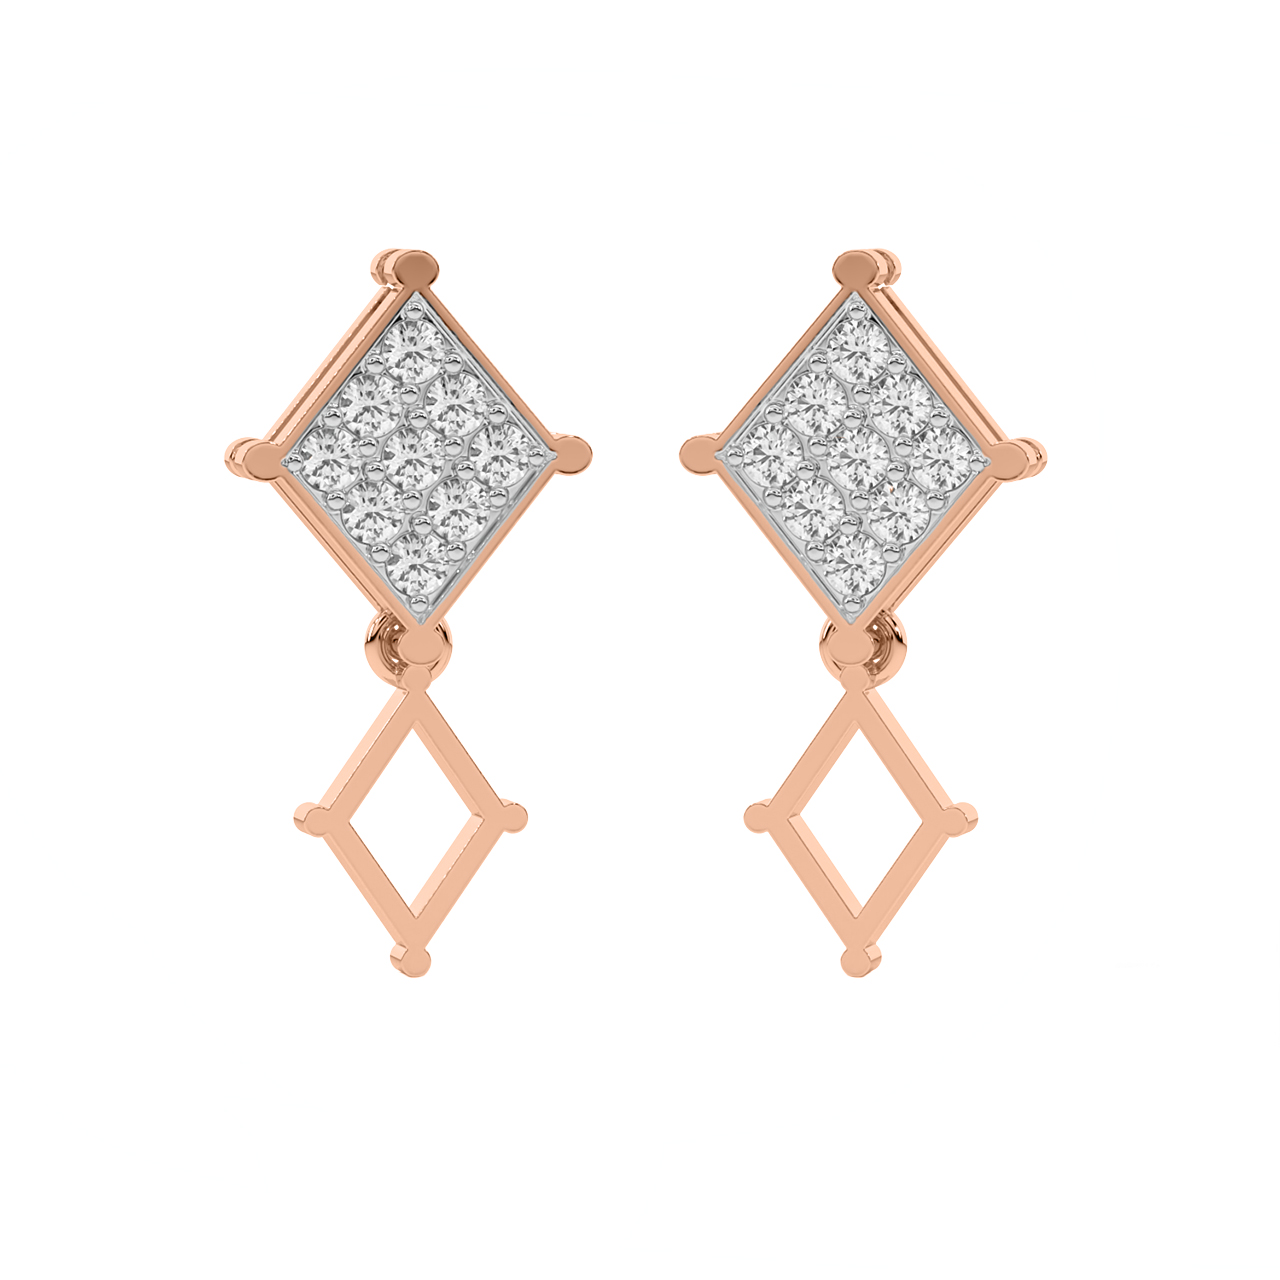 Hanging Square Diamond Earrings